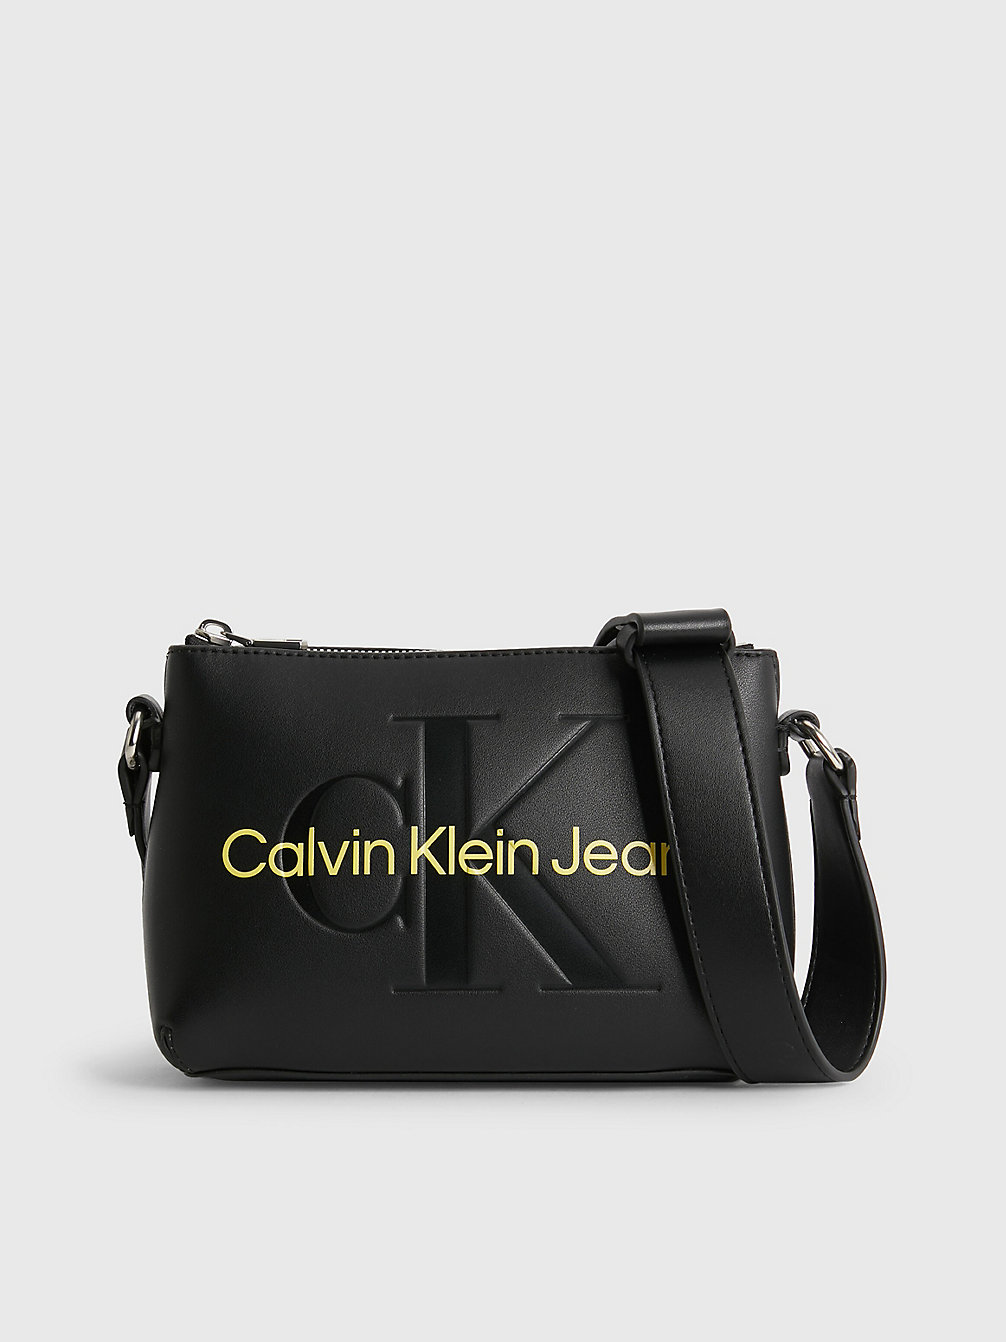 Introducir 72+ imagen calvin klein handbags online